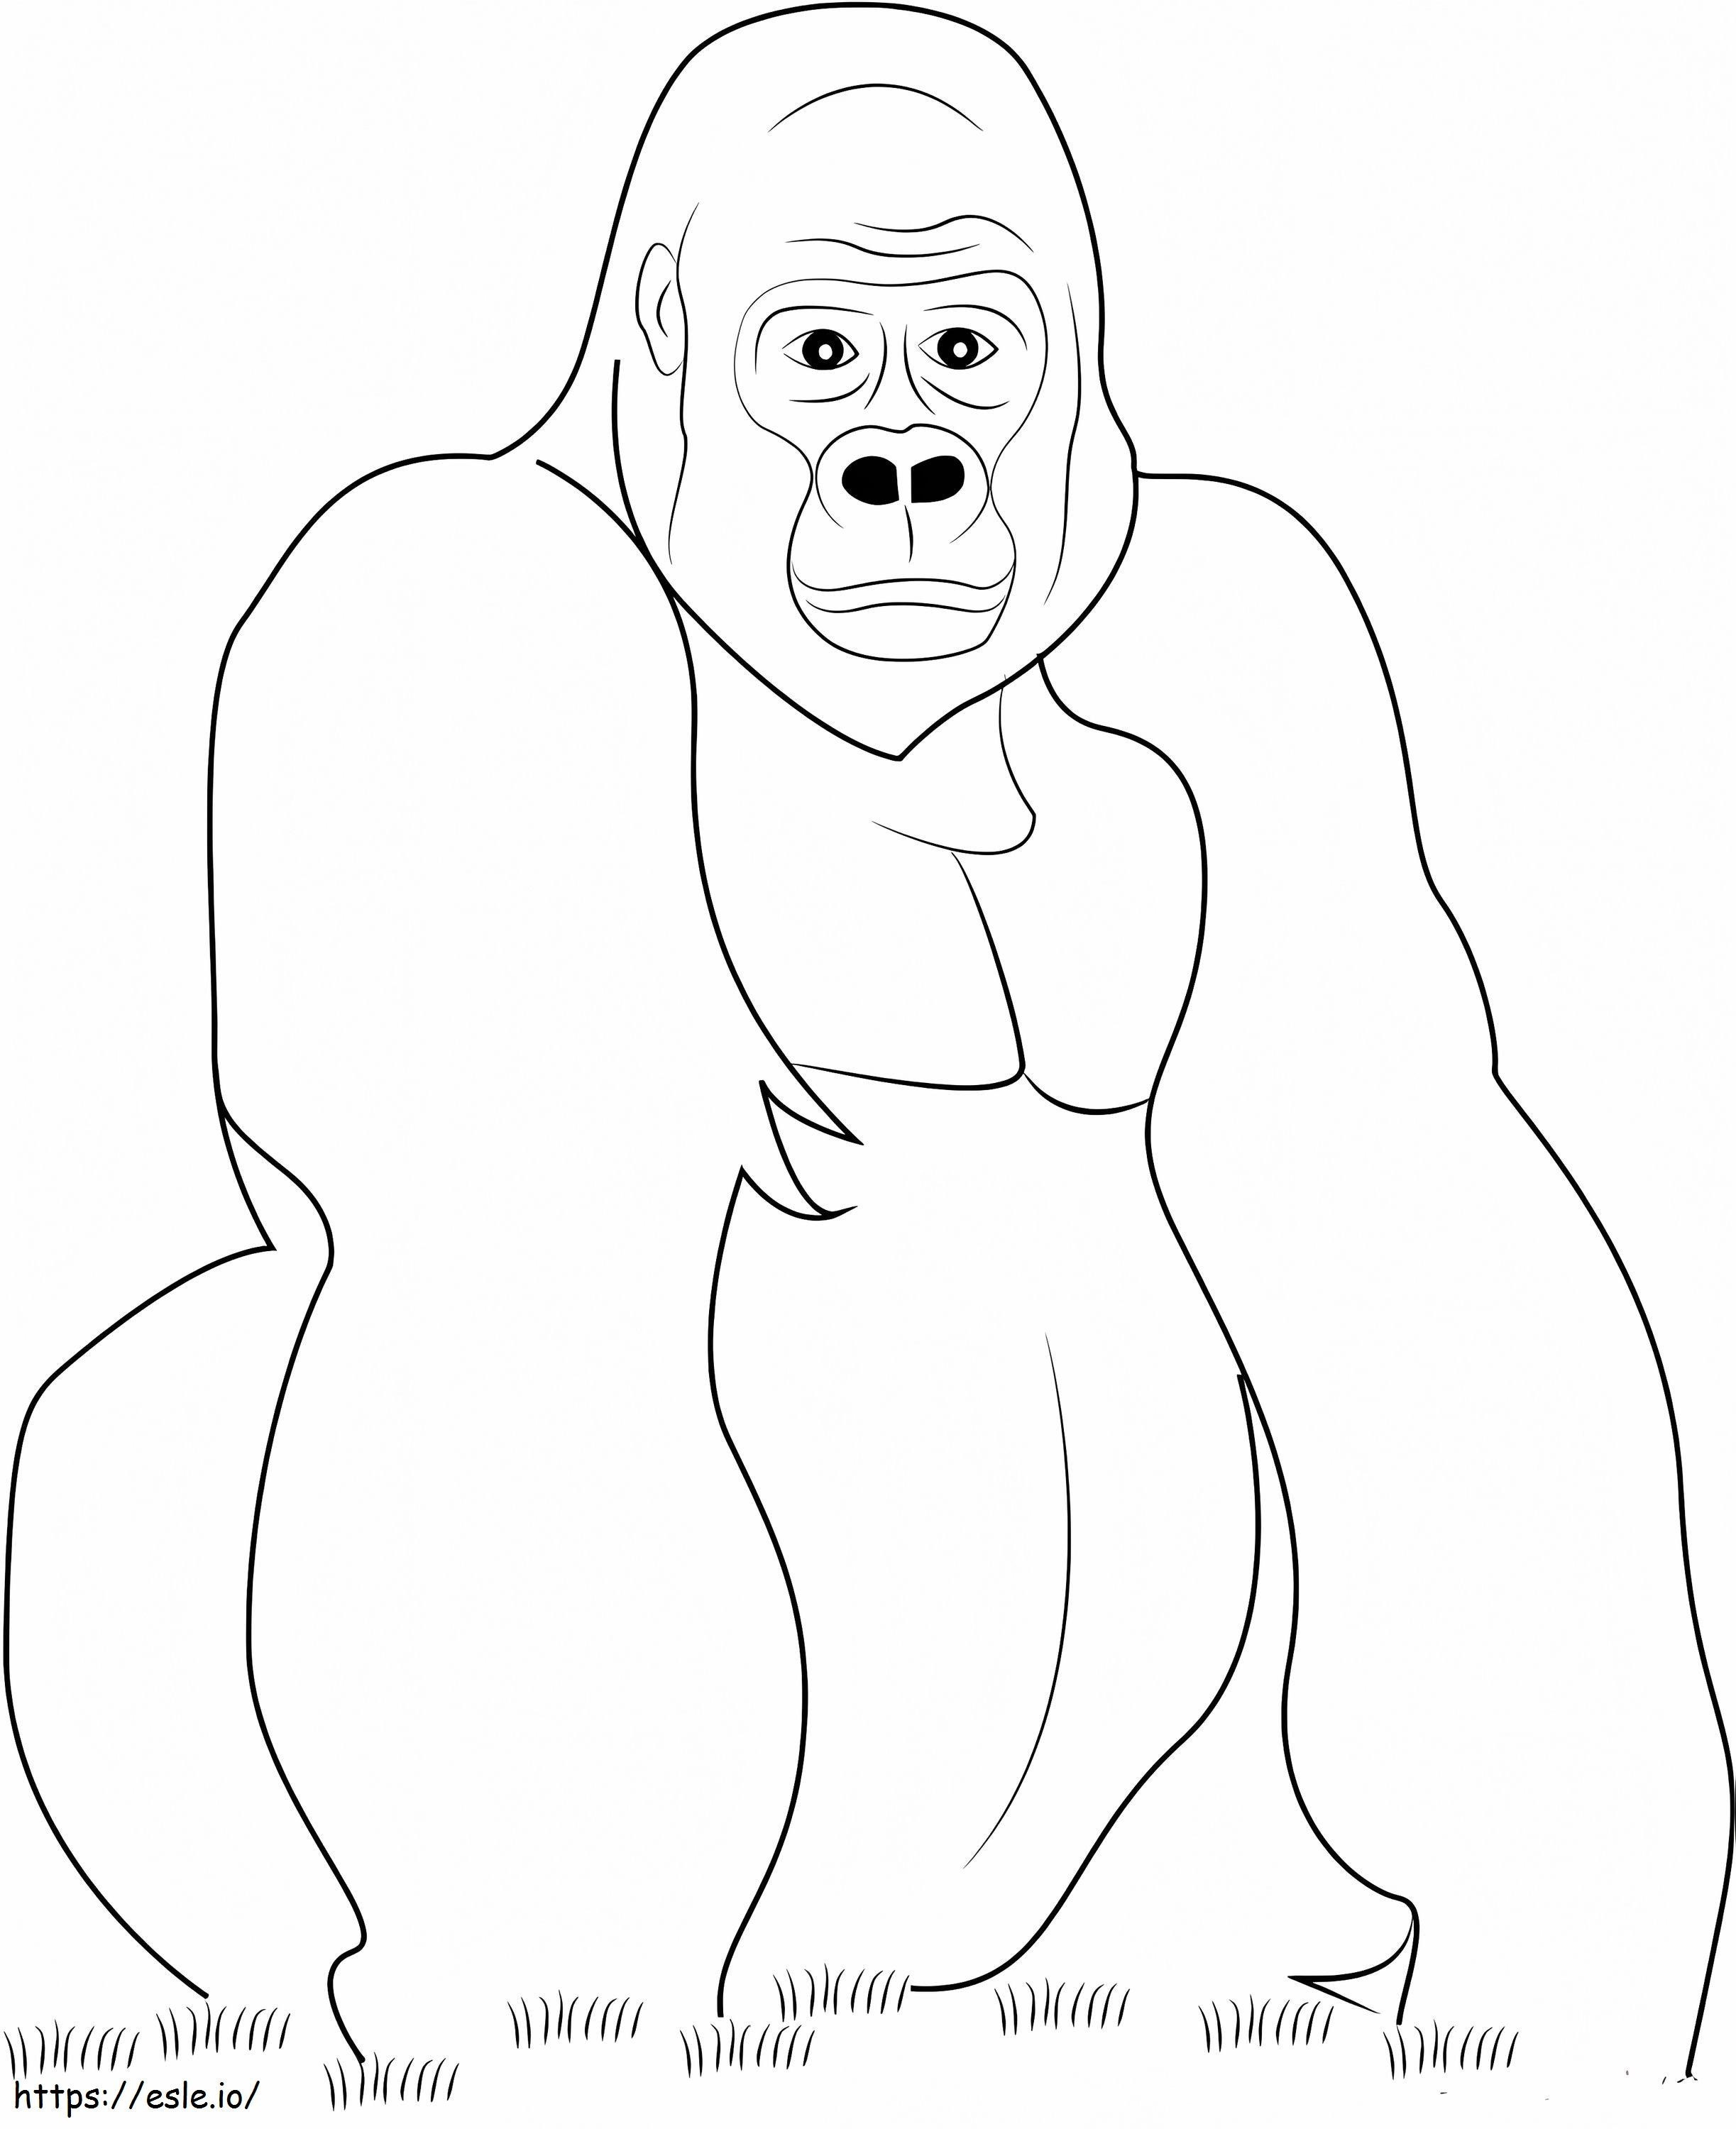 Good Gorilla coloring page